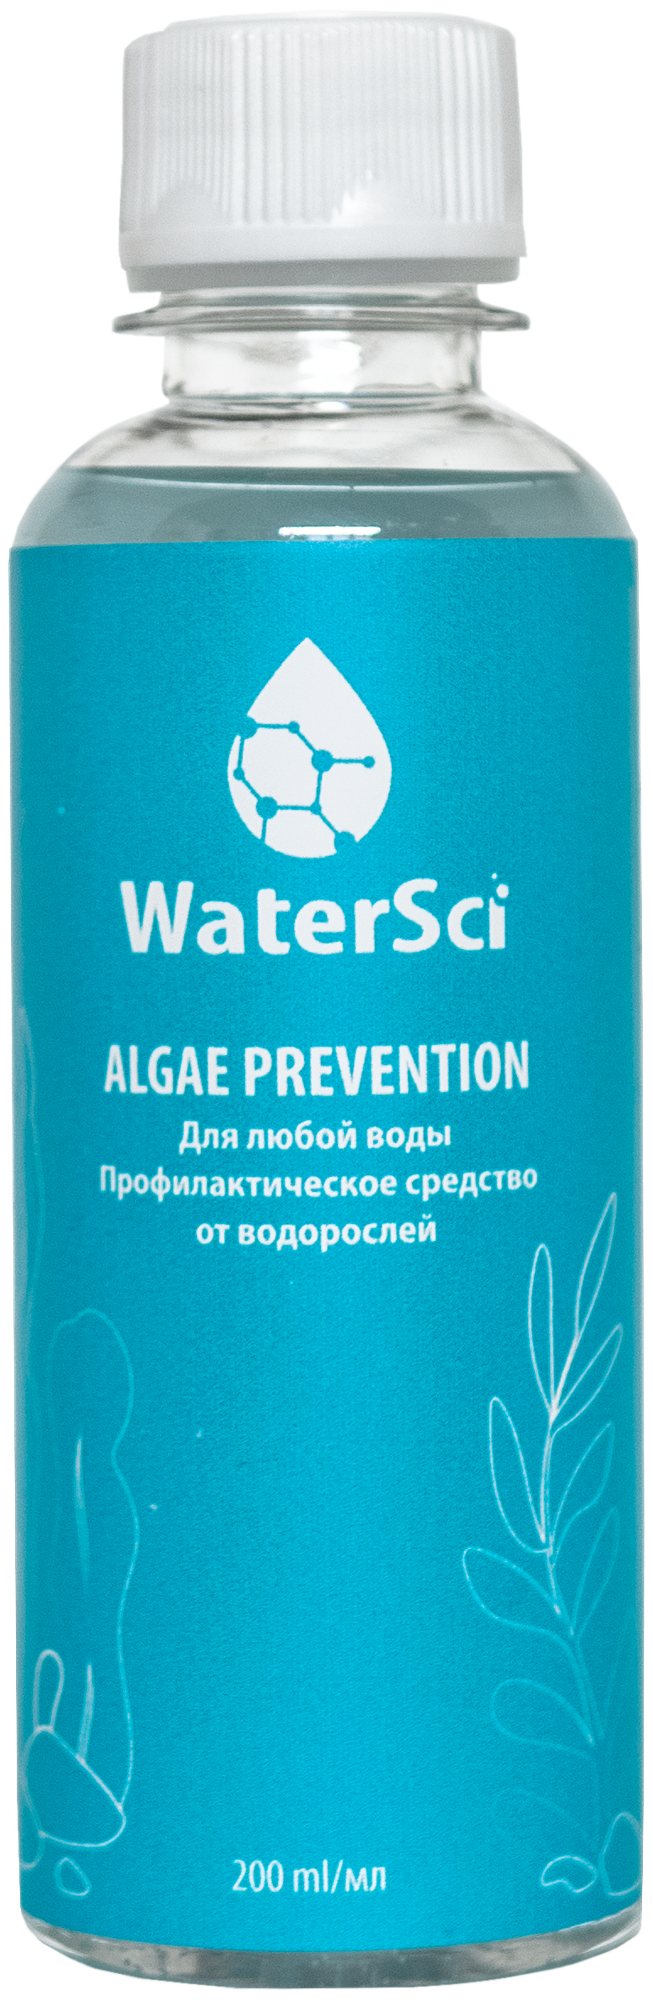 Средство от водорослей Water Sci. Algae prevention, 200 мл.